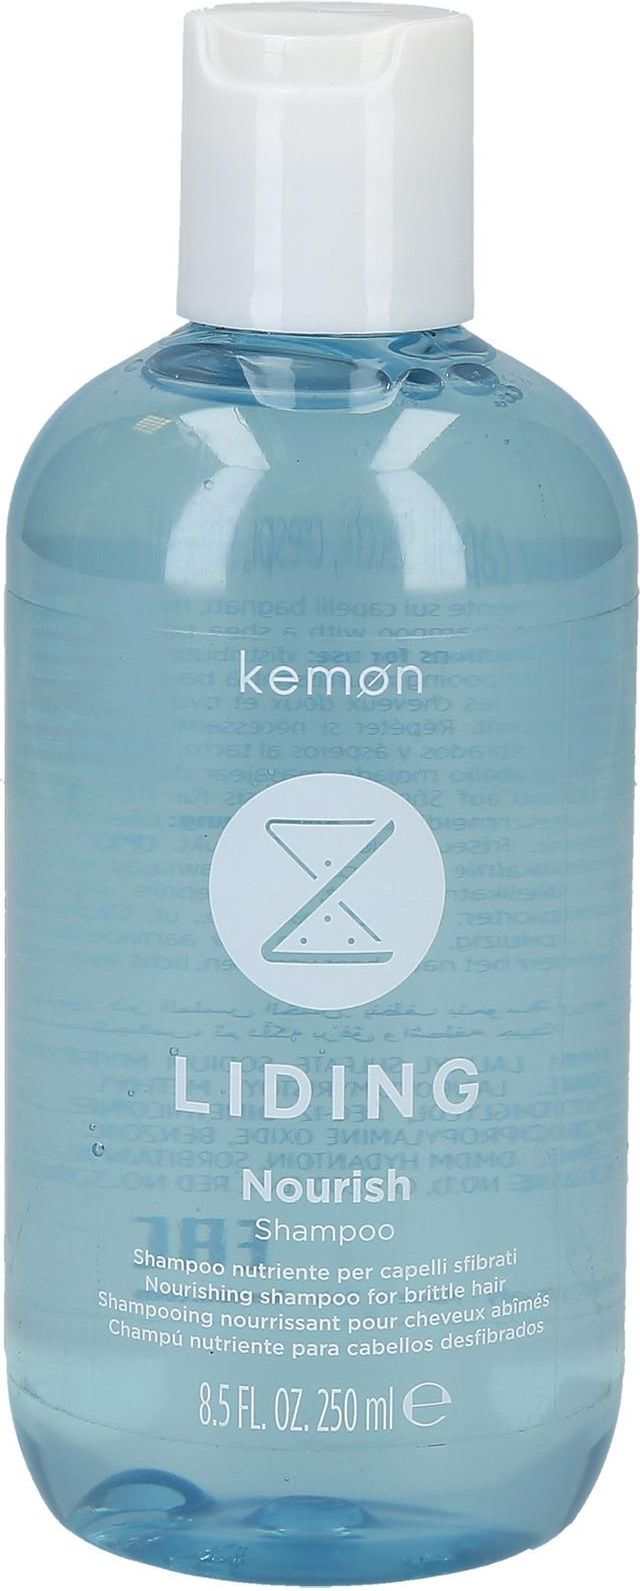 kemon liding nourish szampon opinie